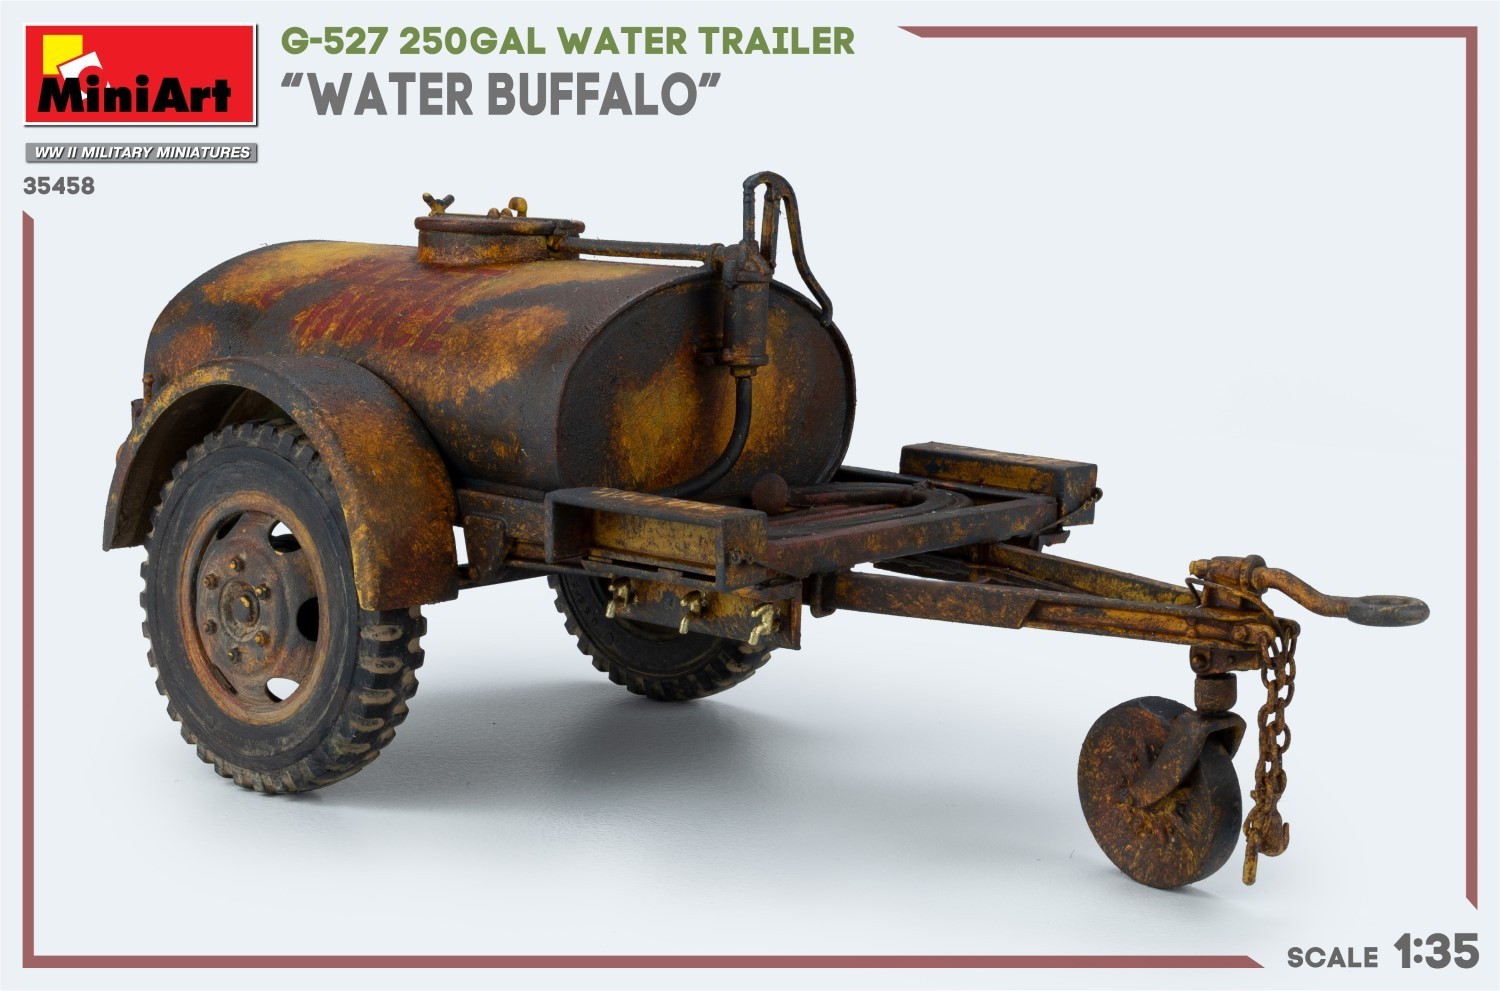 MiniArt G-527 250GAL Water Trailer “Water Buffalo” Rust Paint